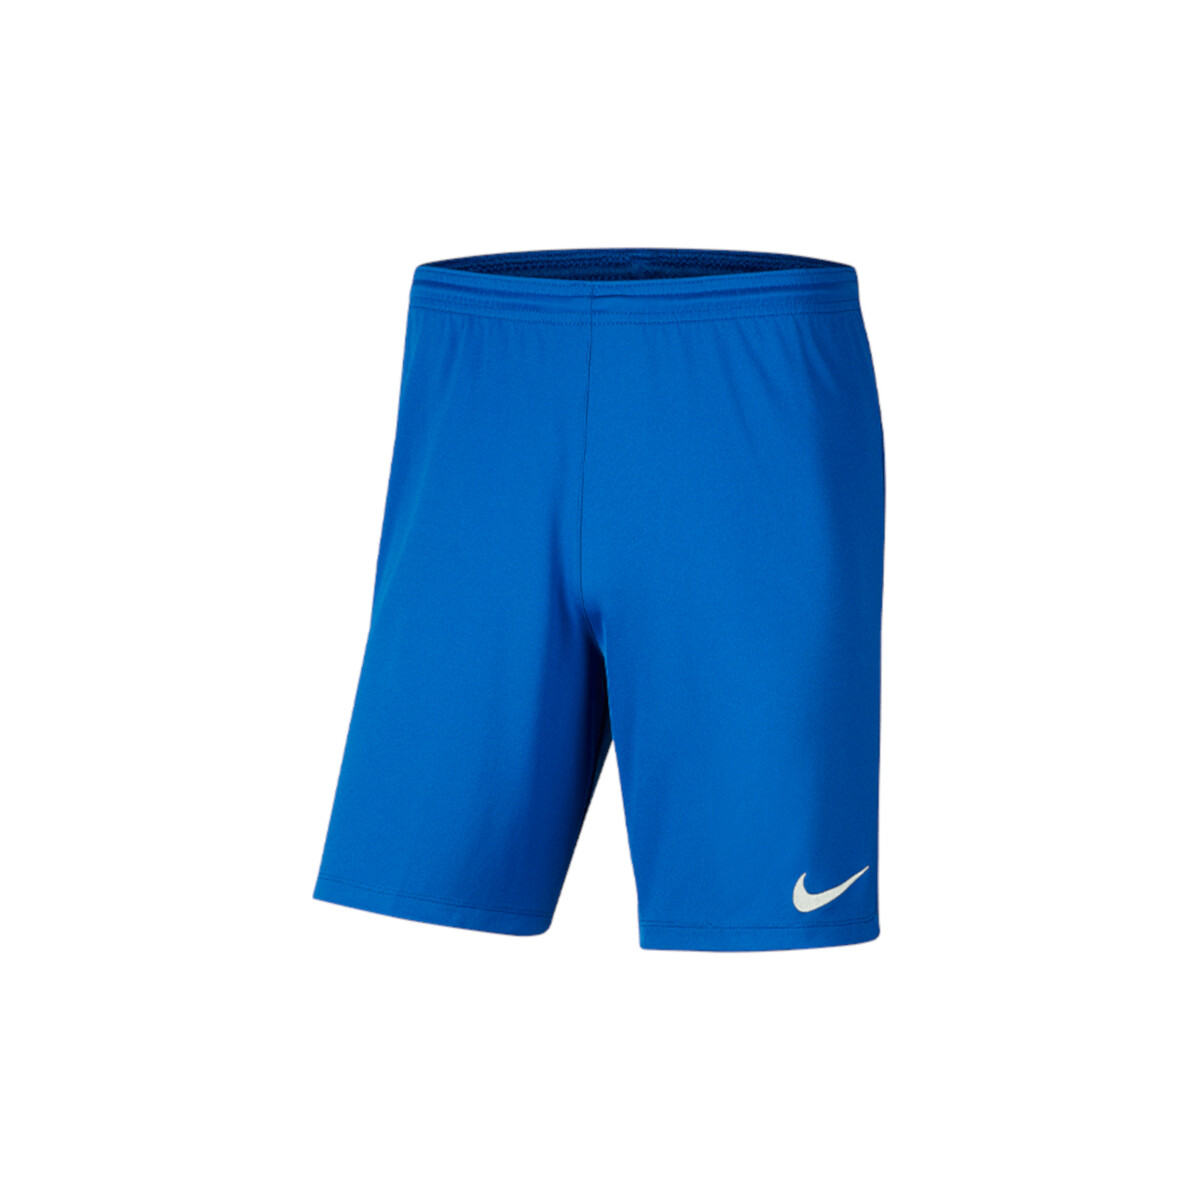 Abbigliamento Uomo Pinocchietto Nike Park III Shorts Blu